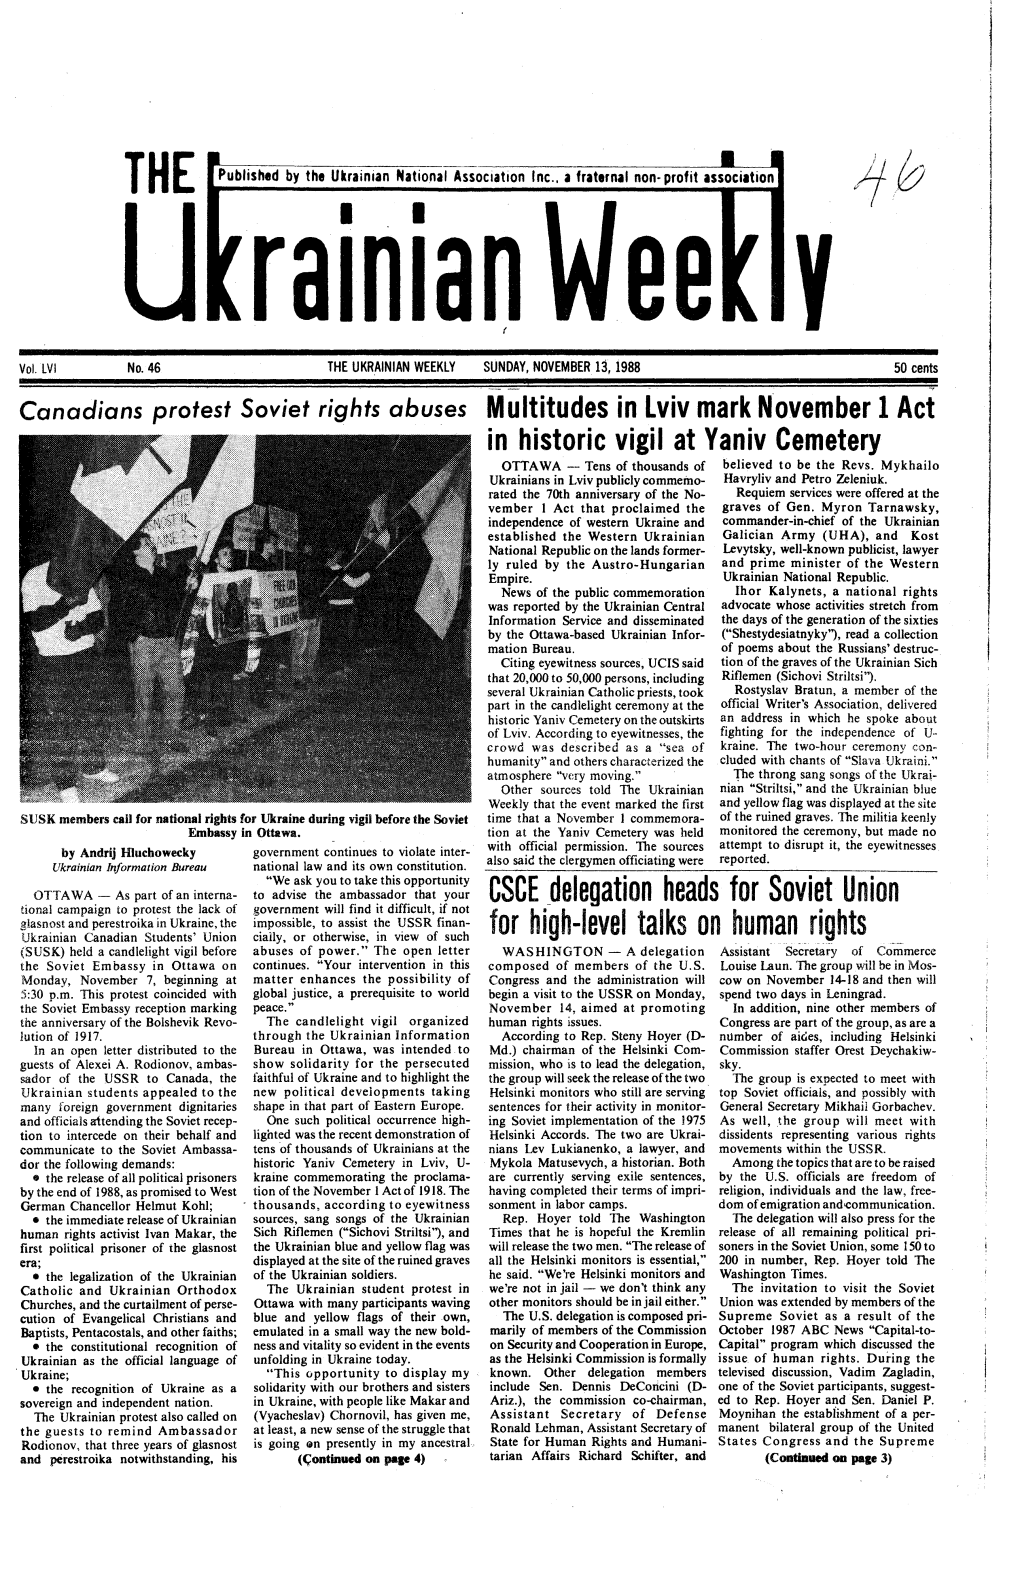 The Ukrainian Weekly 1988, No.46